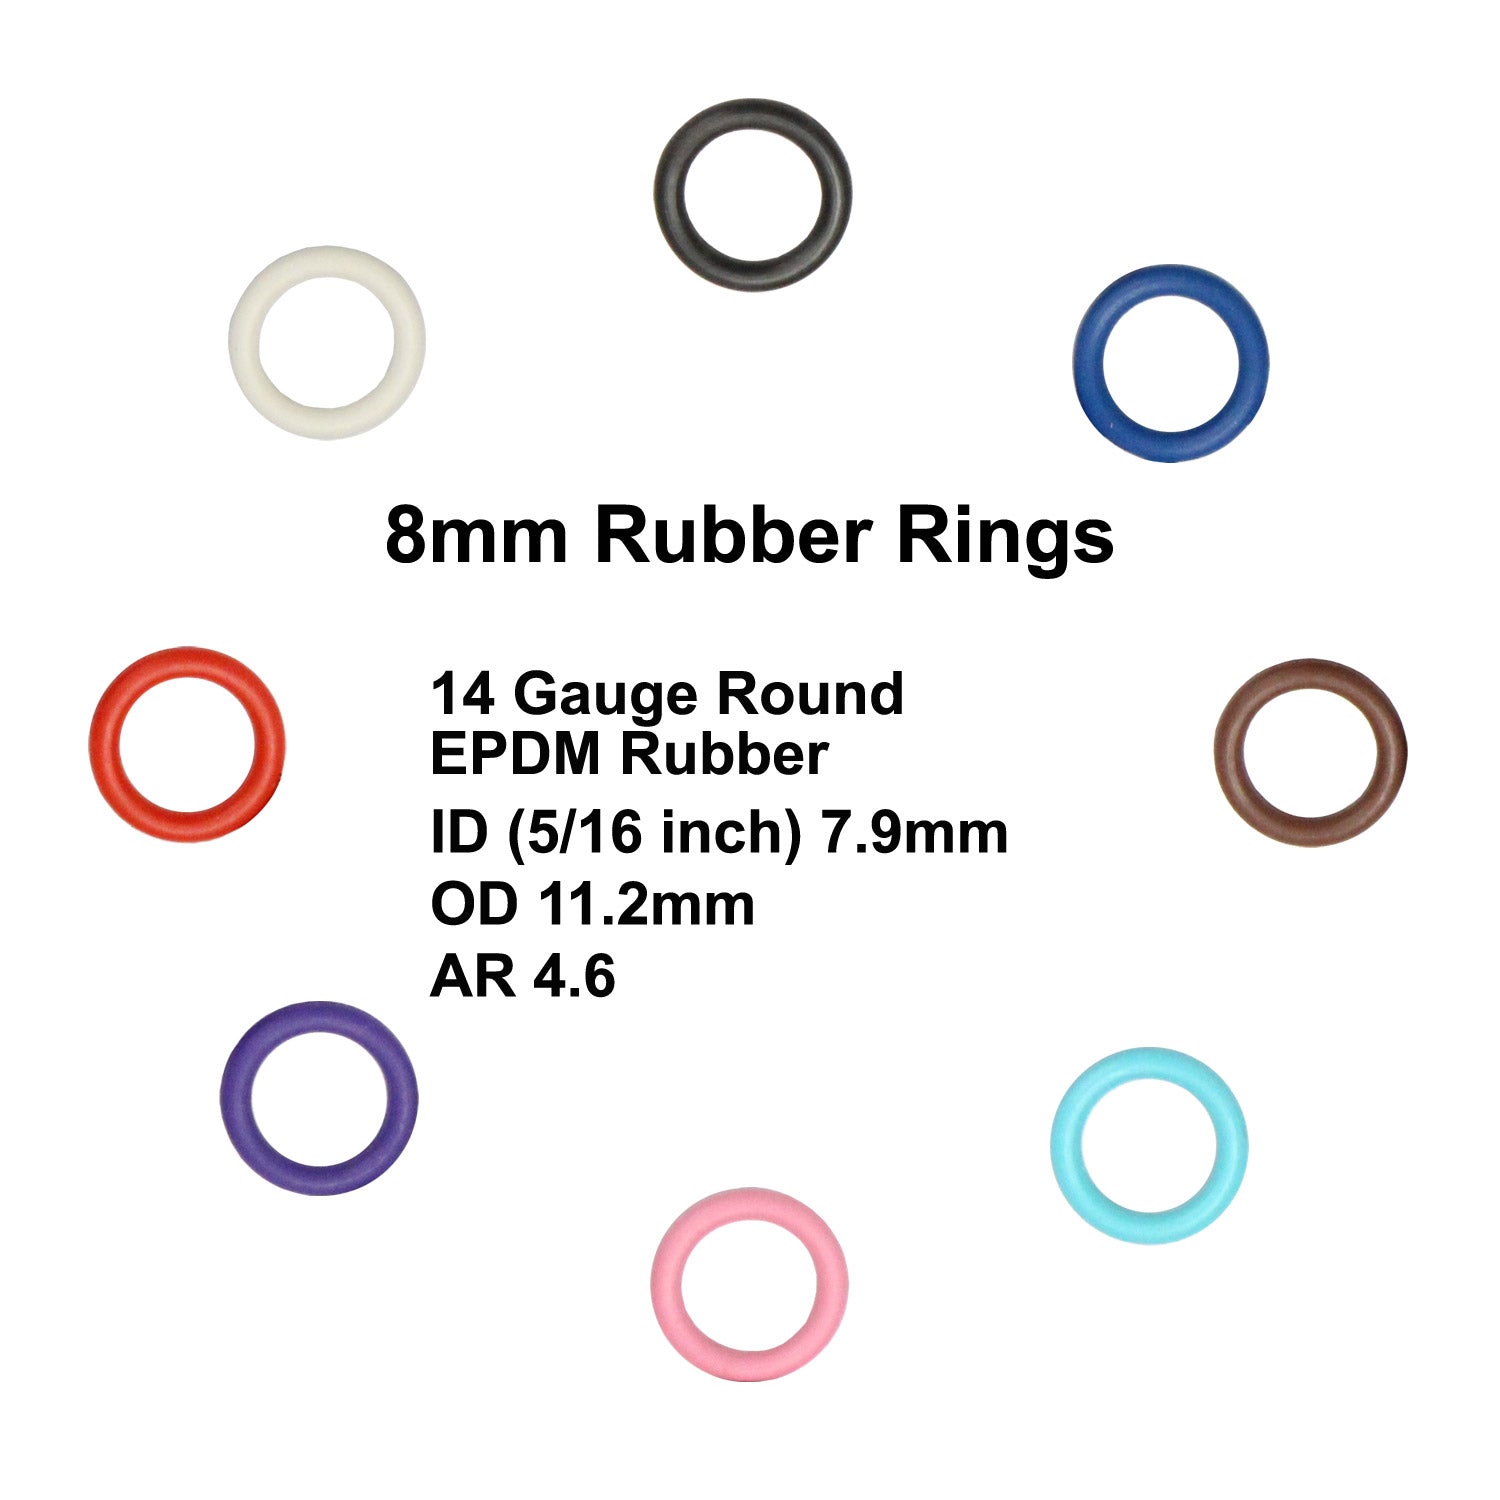 8mm Rubber Rings